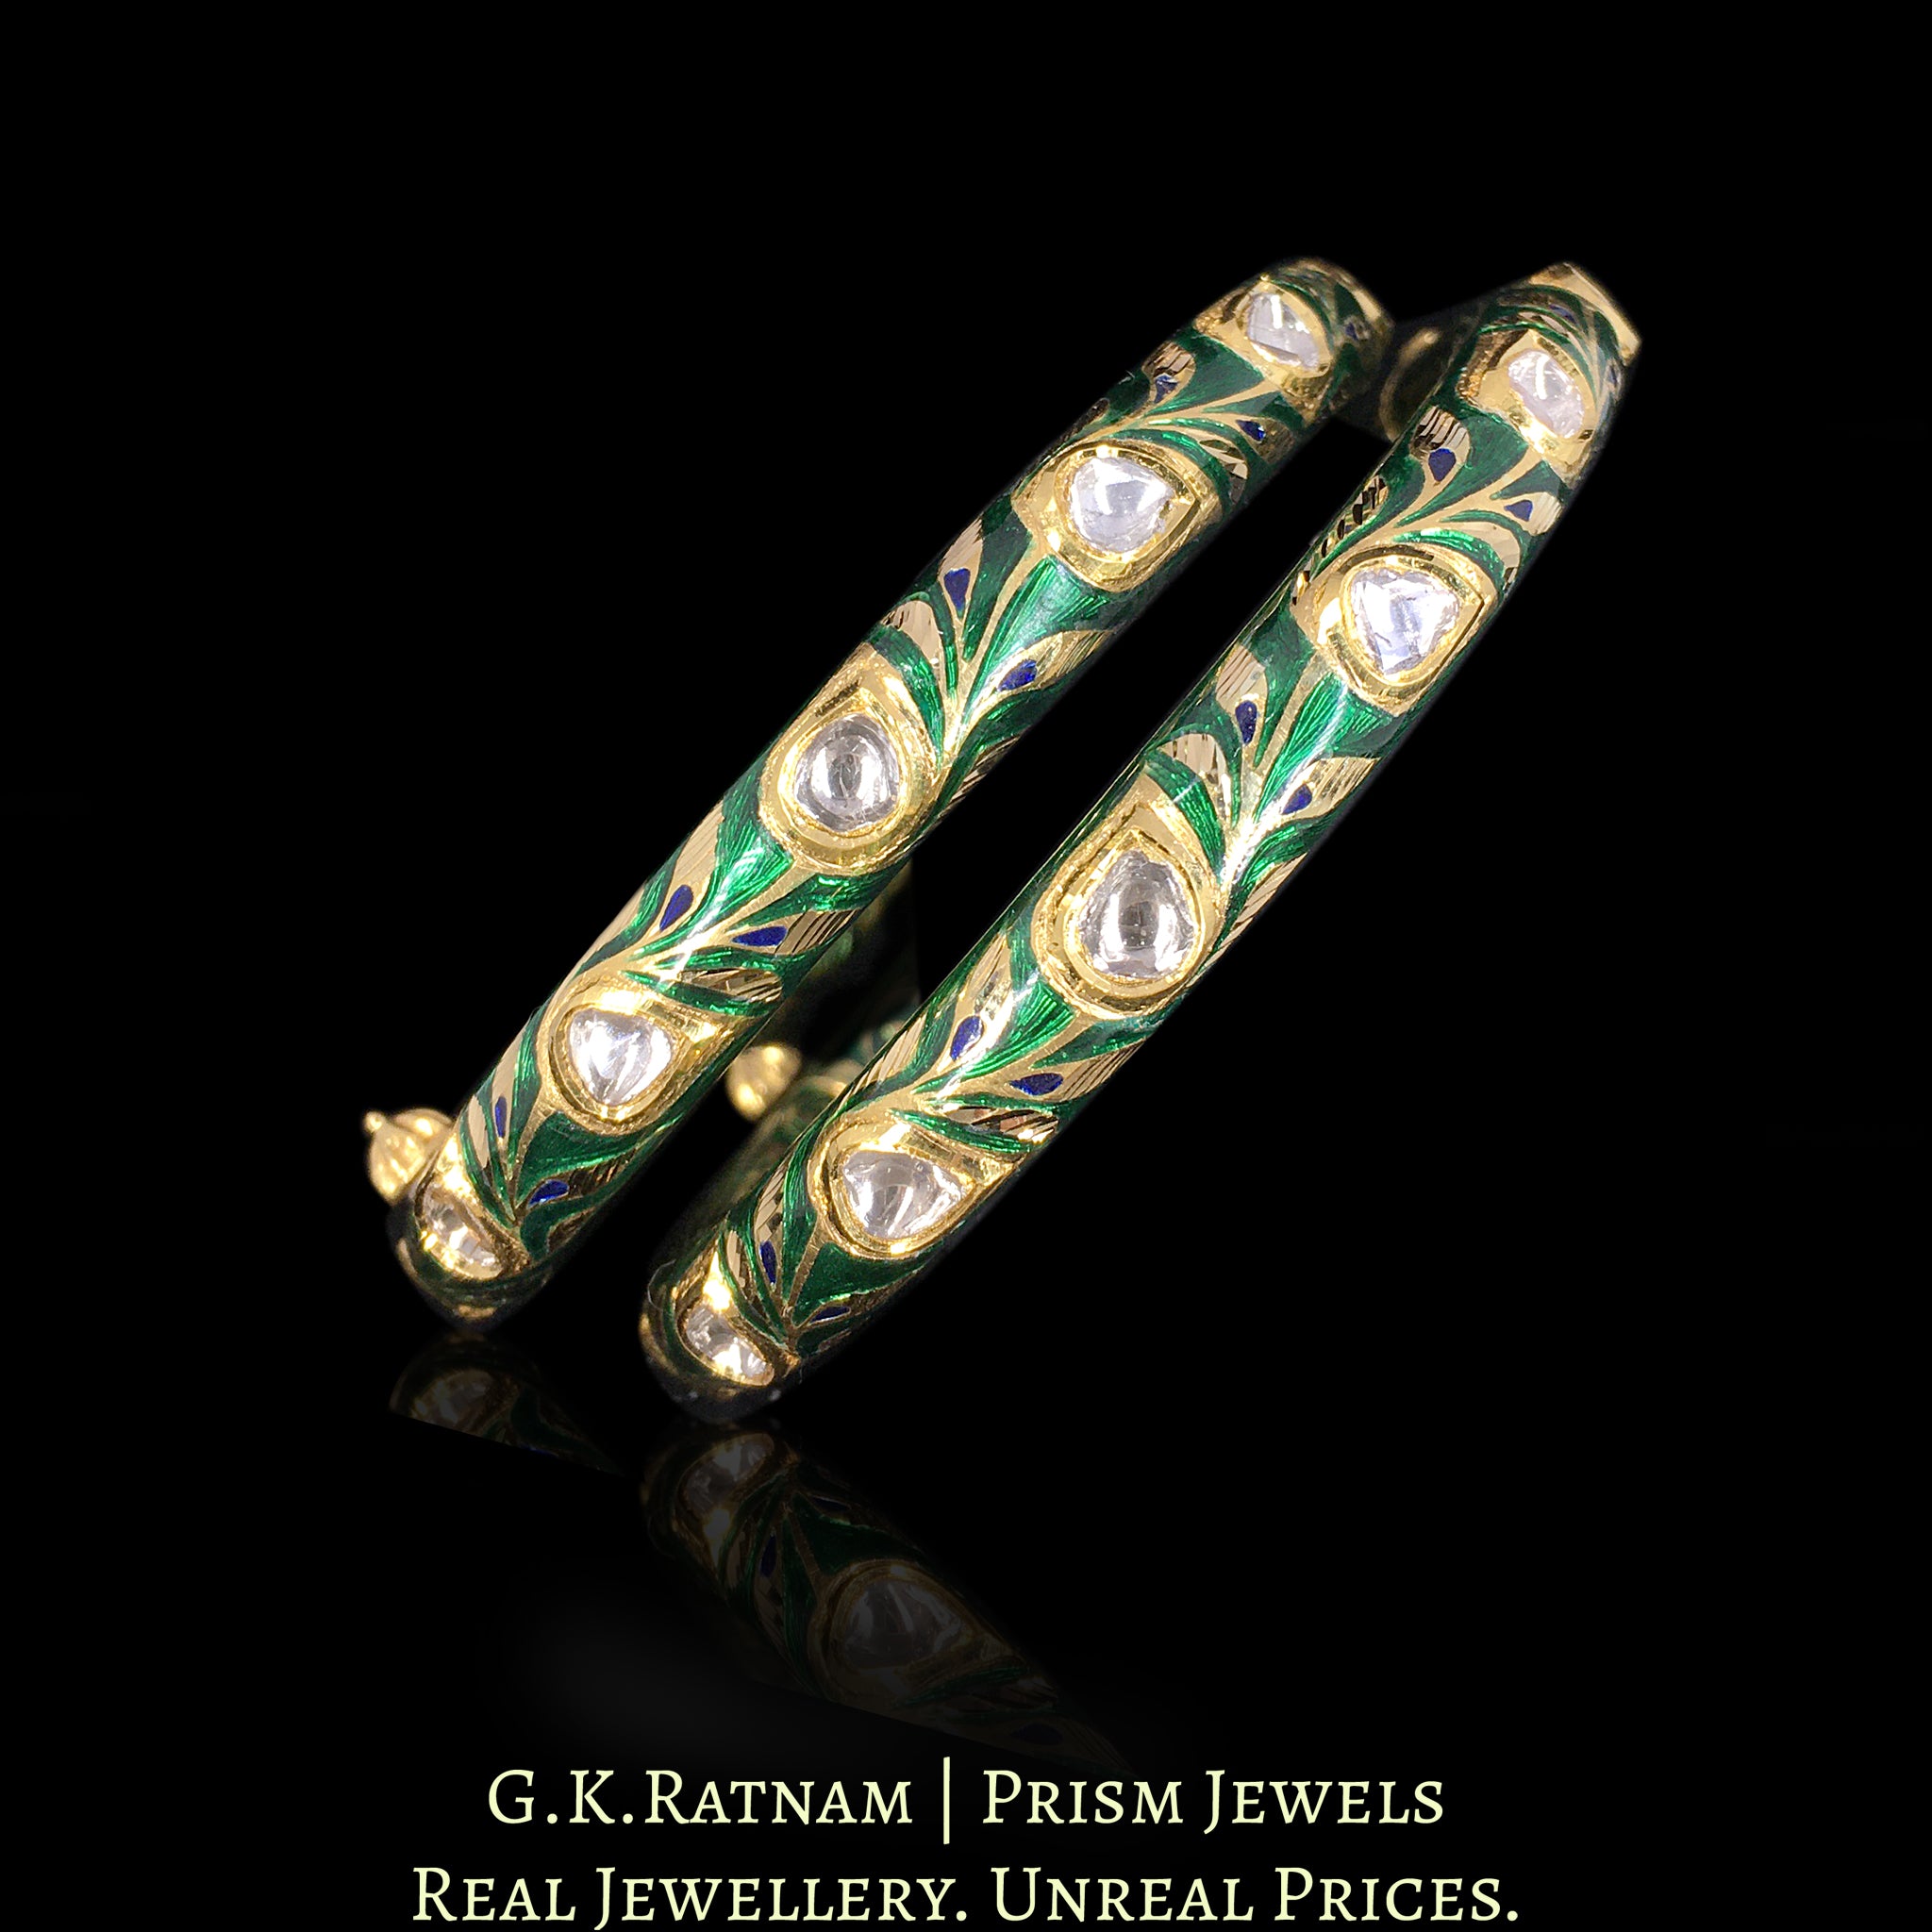 22k Gold and Diamond Polki Bangle Pair With intricate Green Meenakari